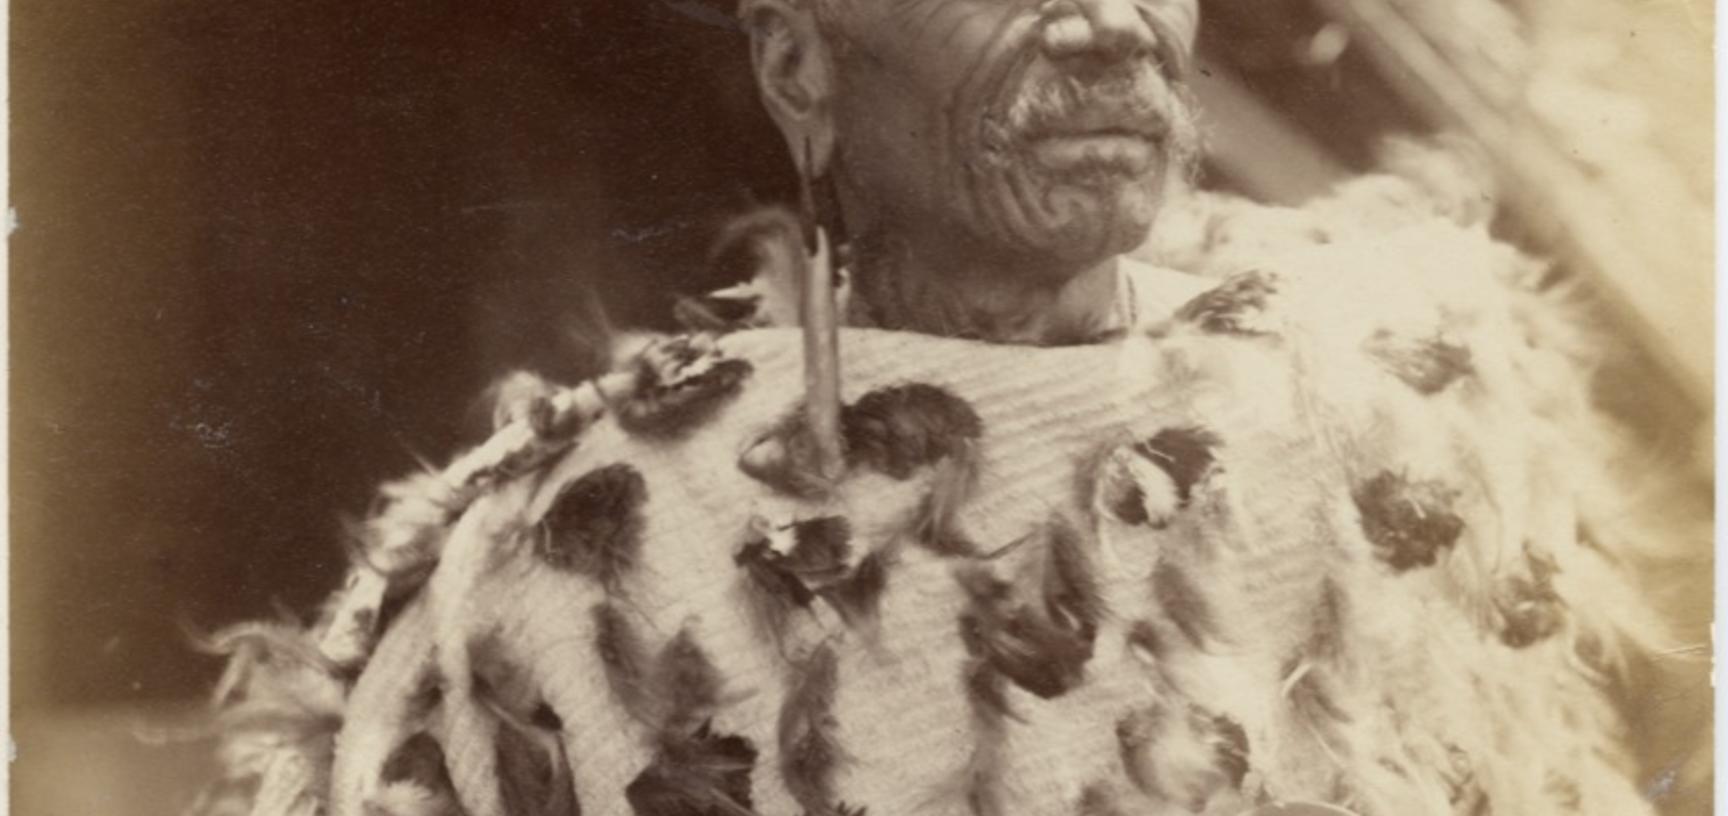 Portrait of Te Heuheu Tukino IV, chief of the Ngāti Tūwharetoa, a Māori tribe of the North Island. Photograph by Alfred Burton for the Burton Brothers studio (Dunedin). Tokaanu, North Island, New Zealand. Circa 1885.